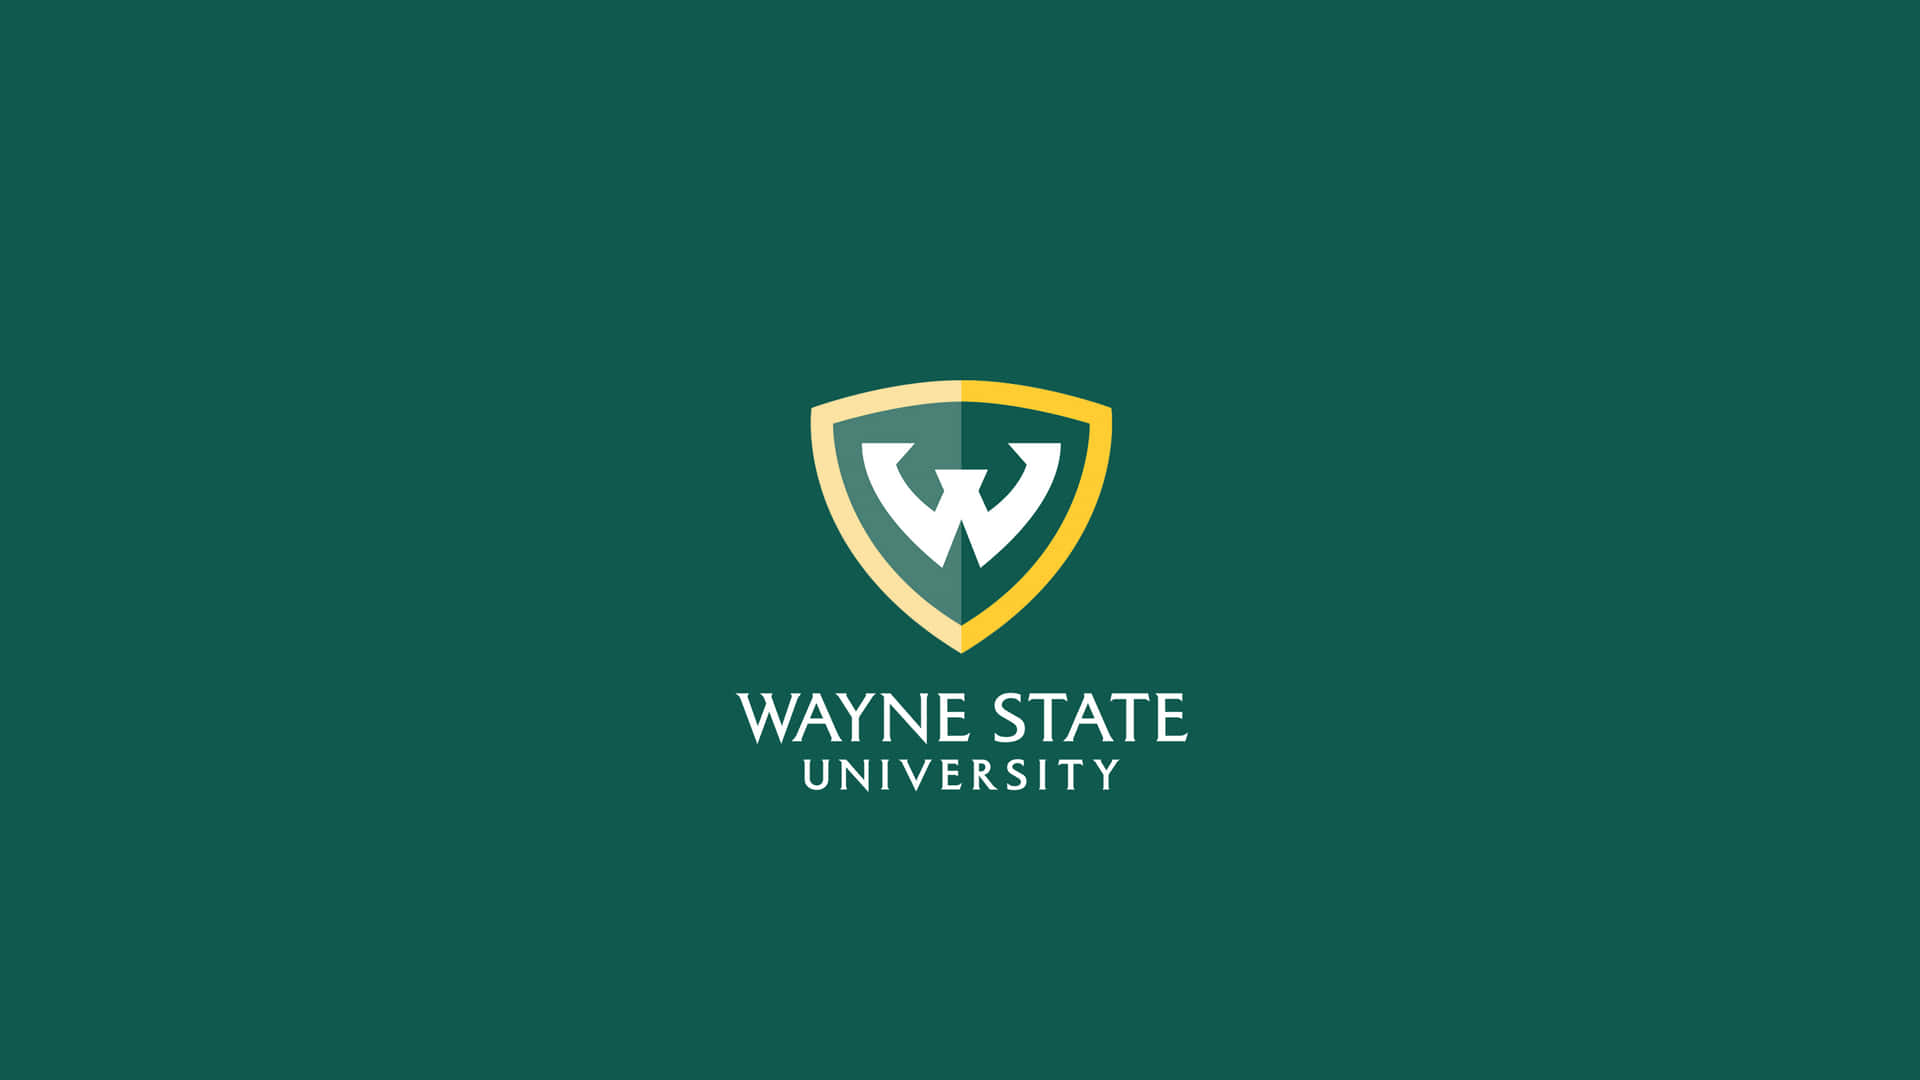 Wayne State University 2560 X 1440 Wallpaper